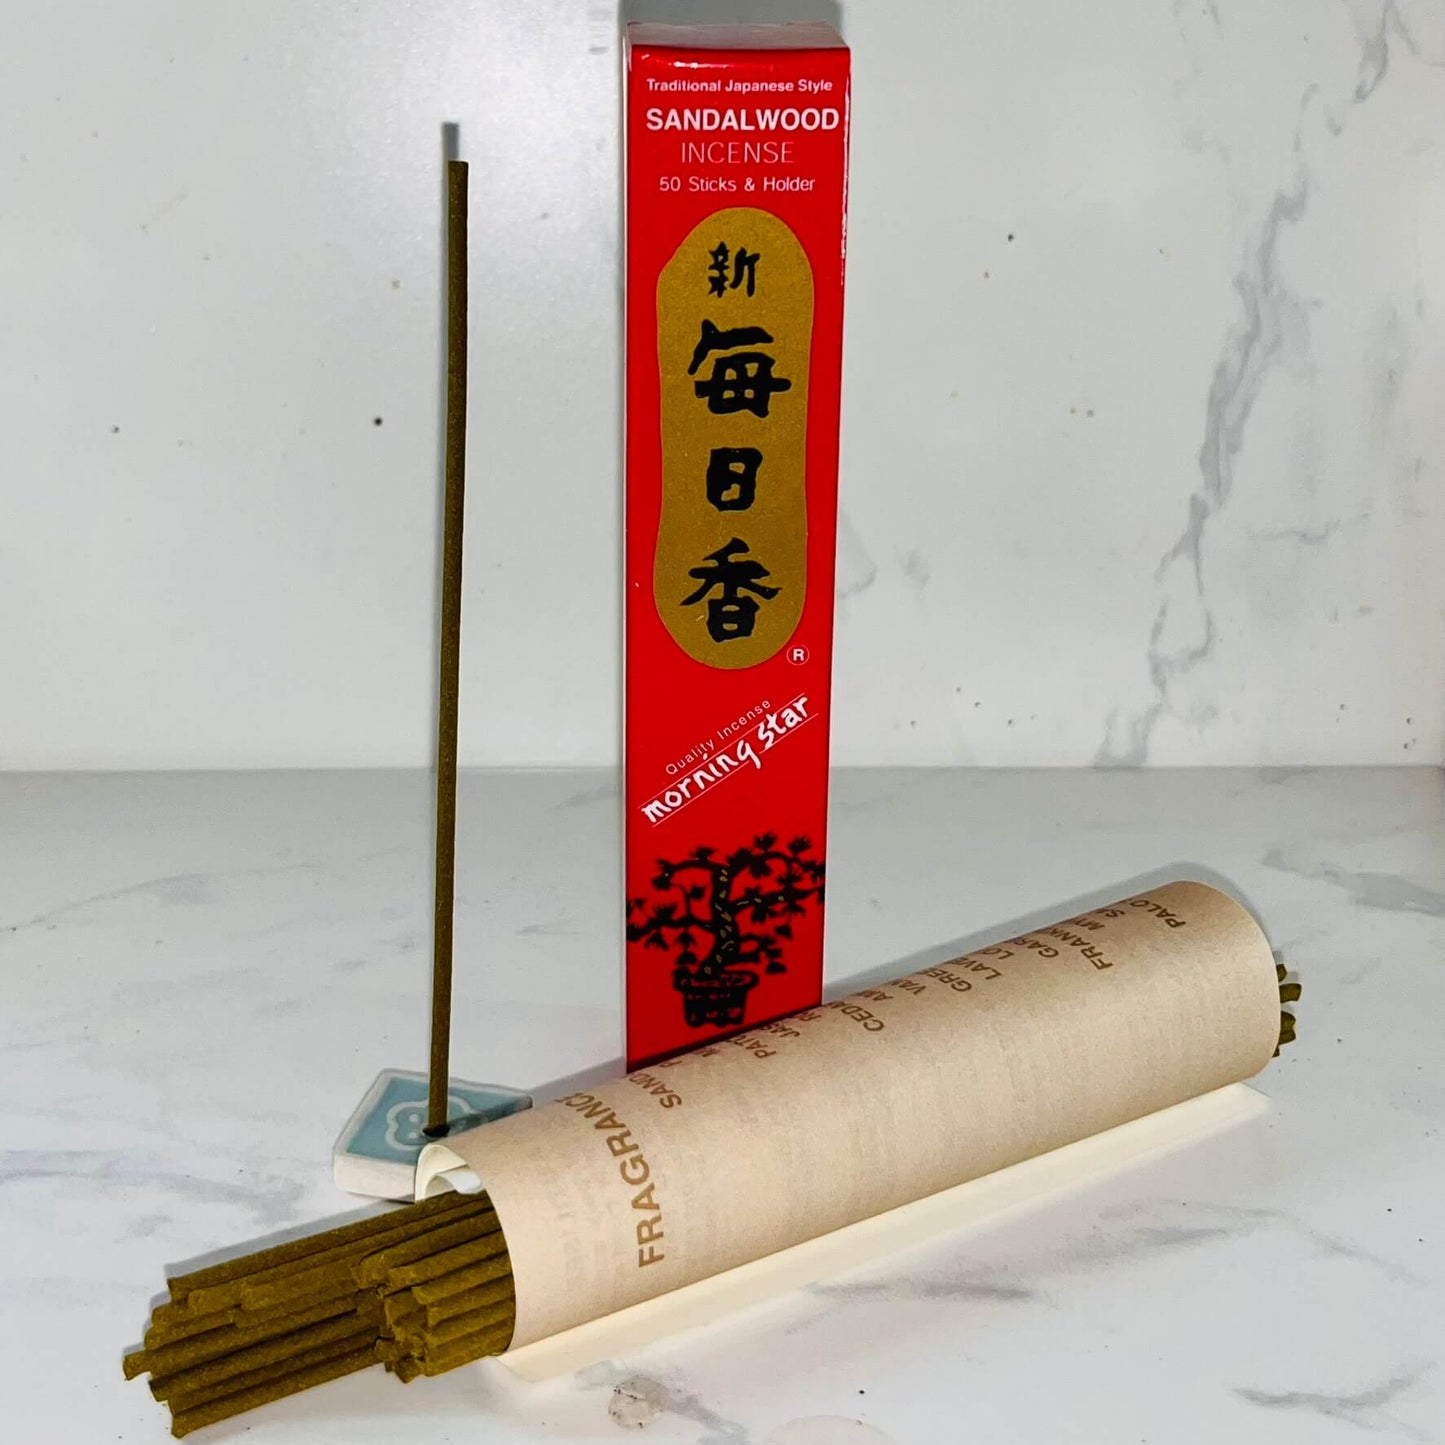 Morning Star SANDALWOOD Japanese Incense